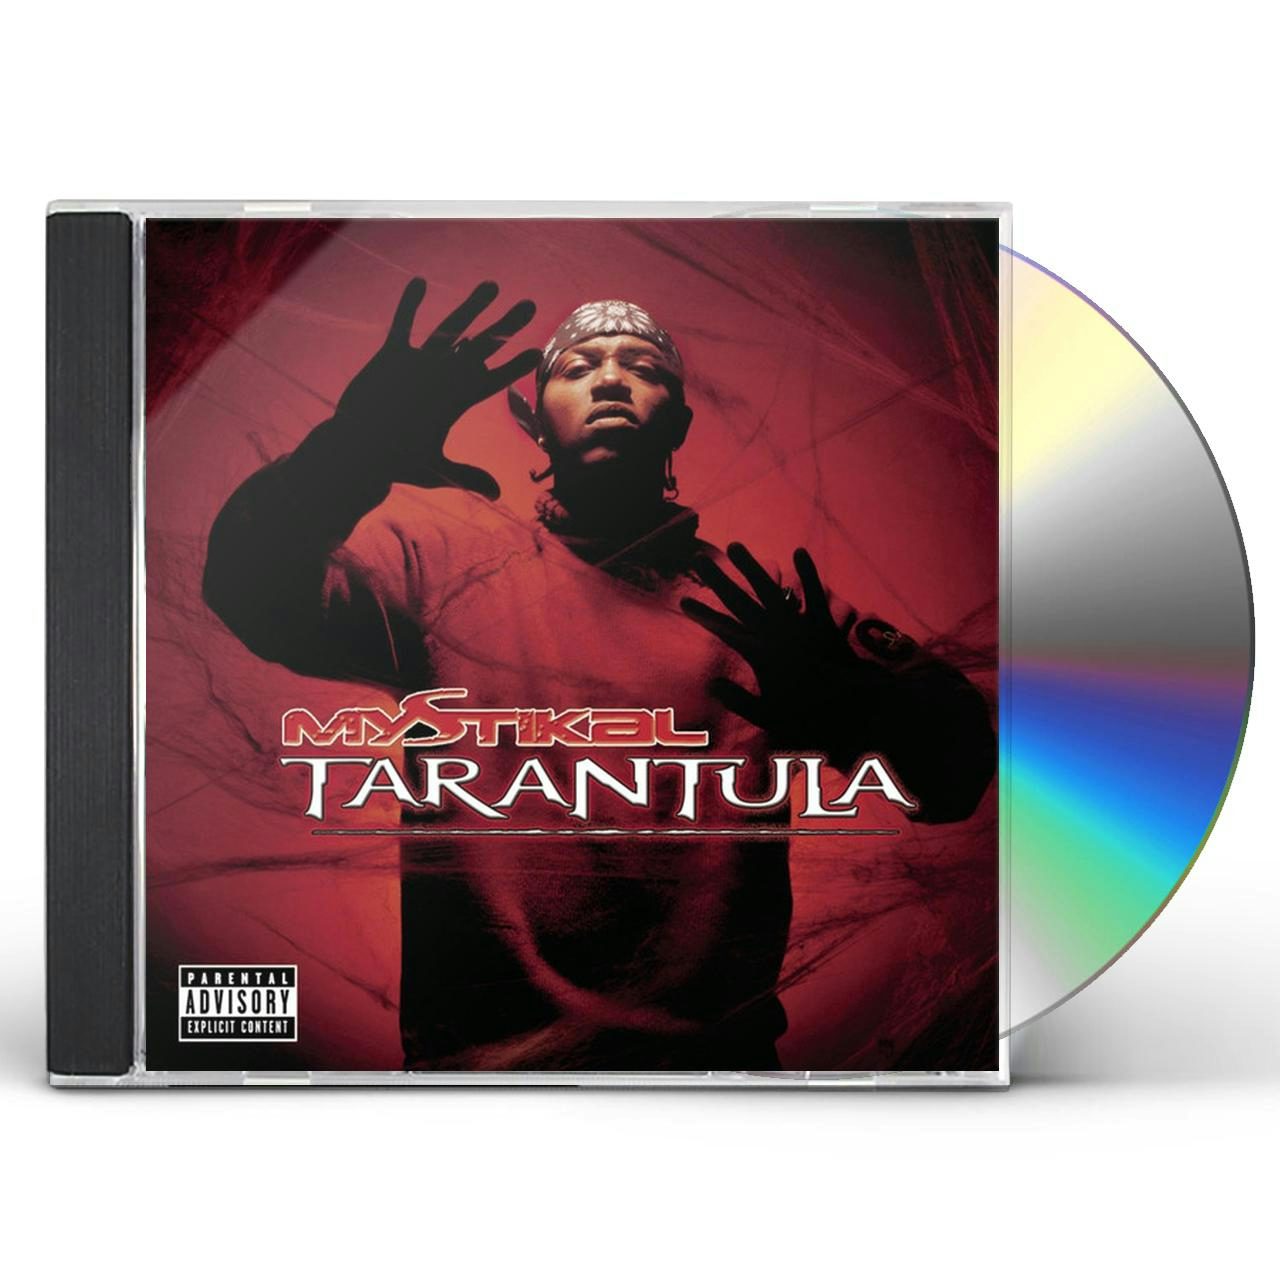 mystikal tarantula album track list